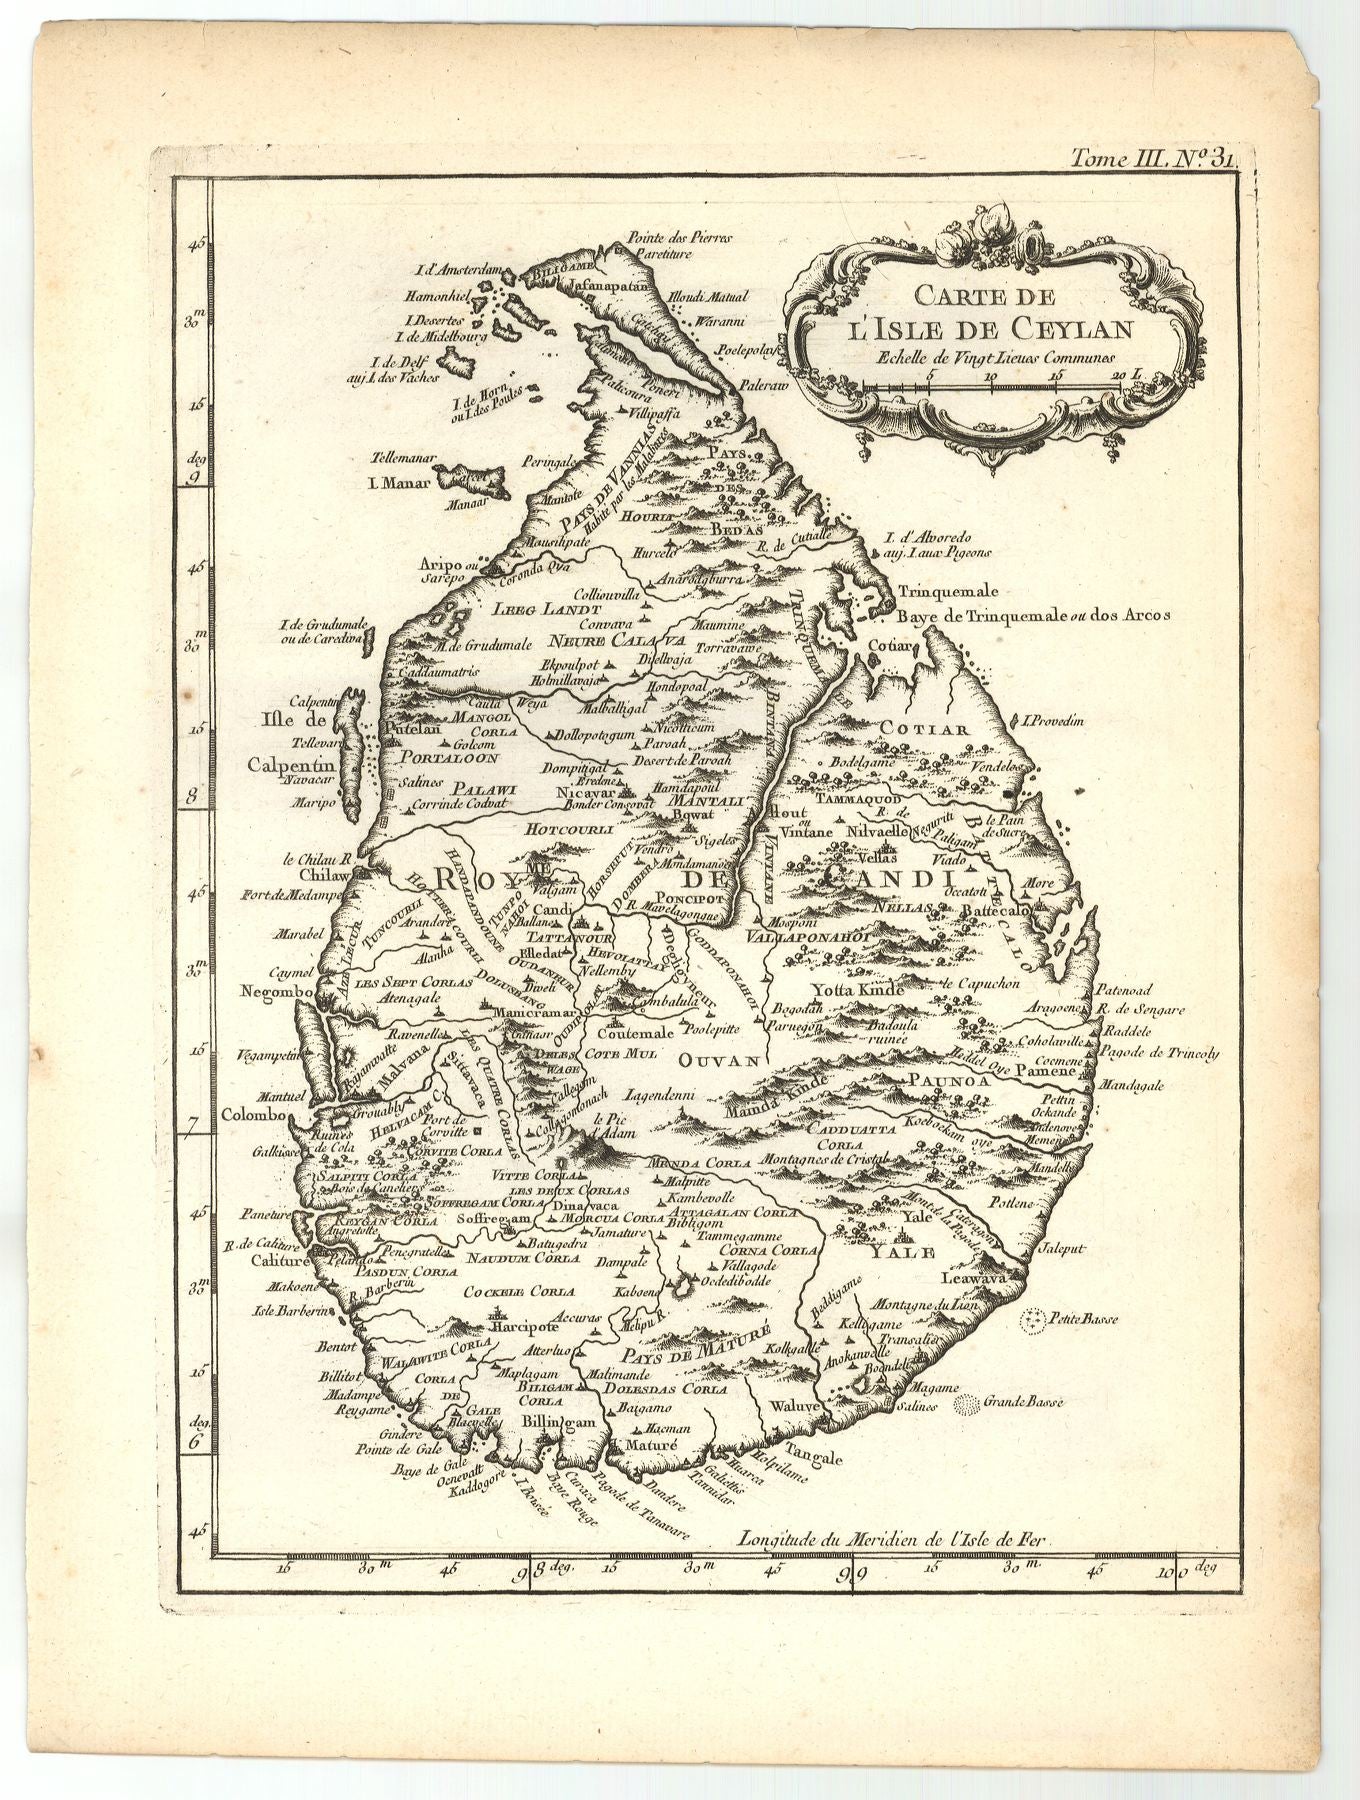 Sri Lanka im Jahr 1750 von Jacques Nicolas Sanson